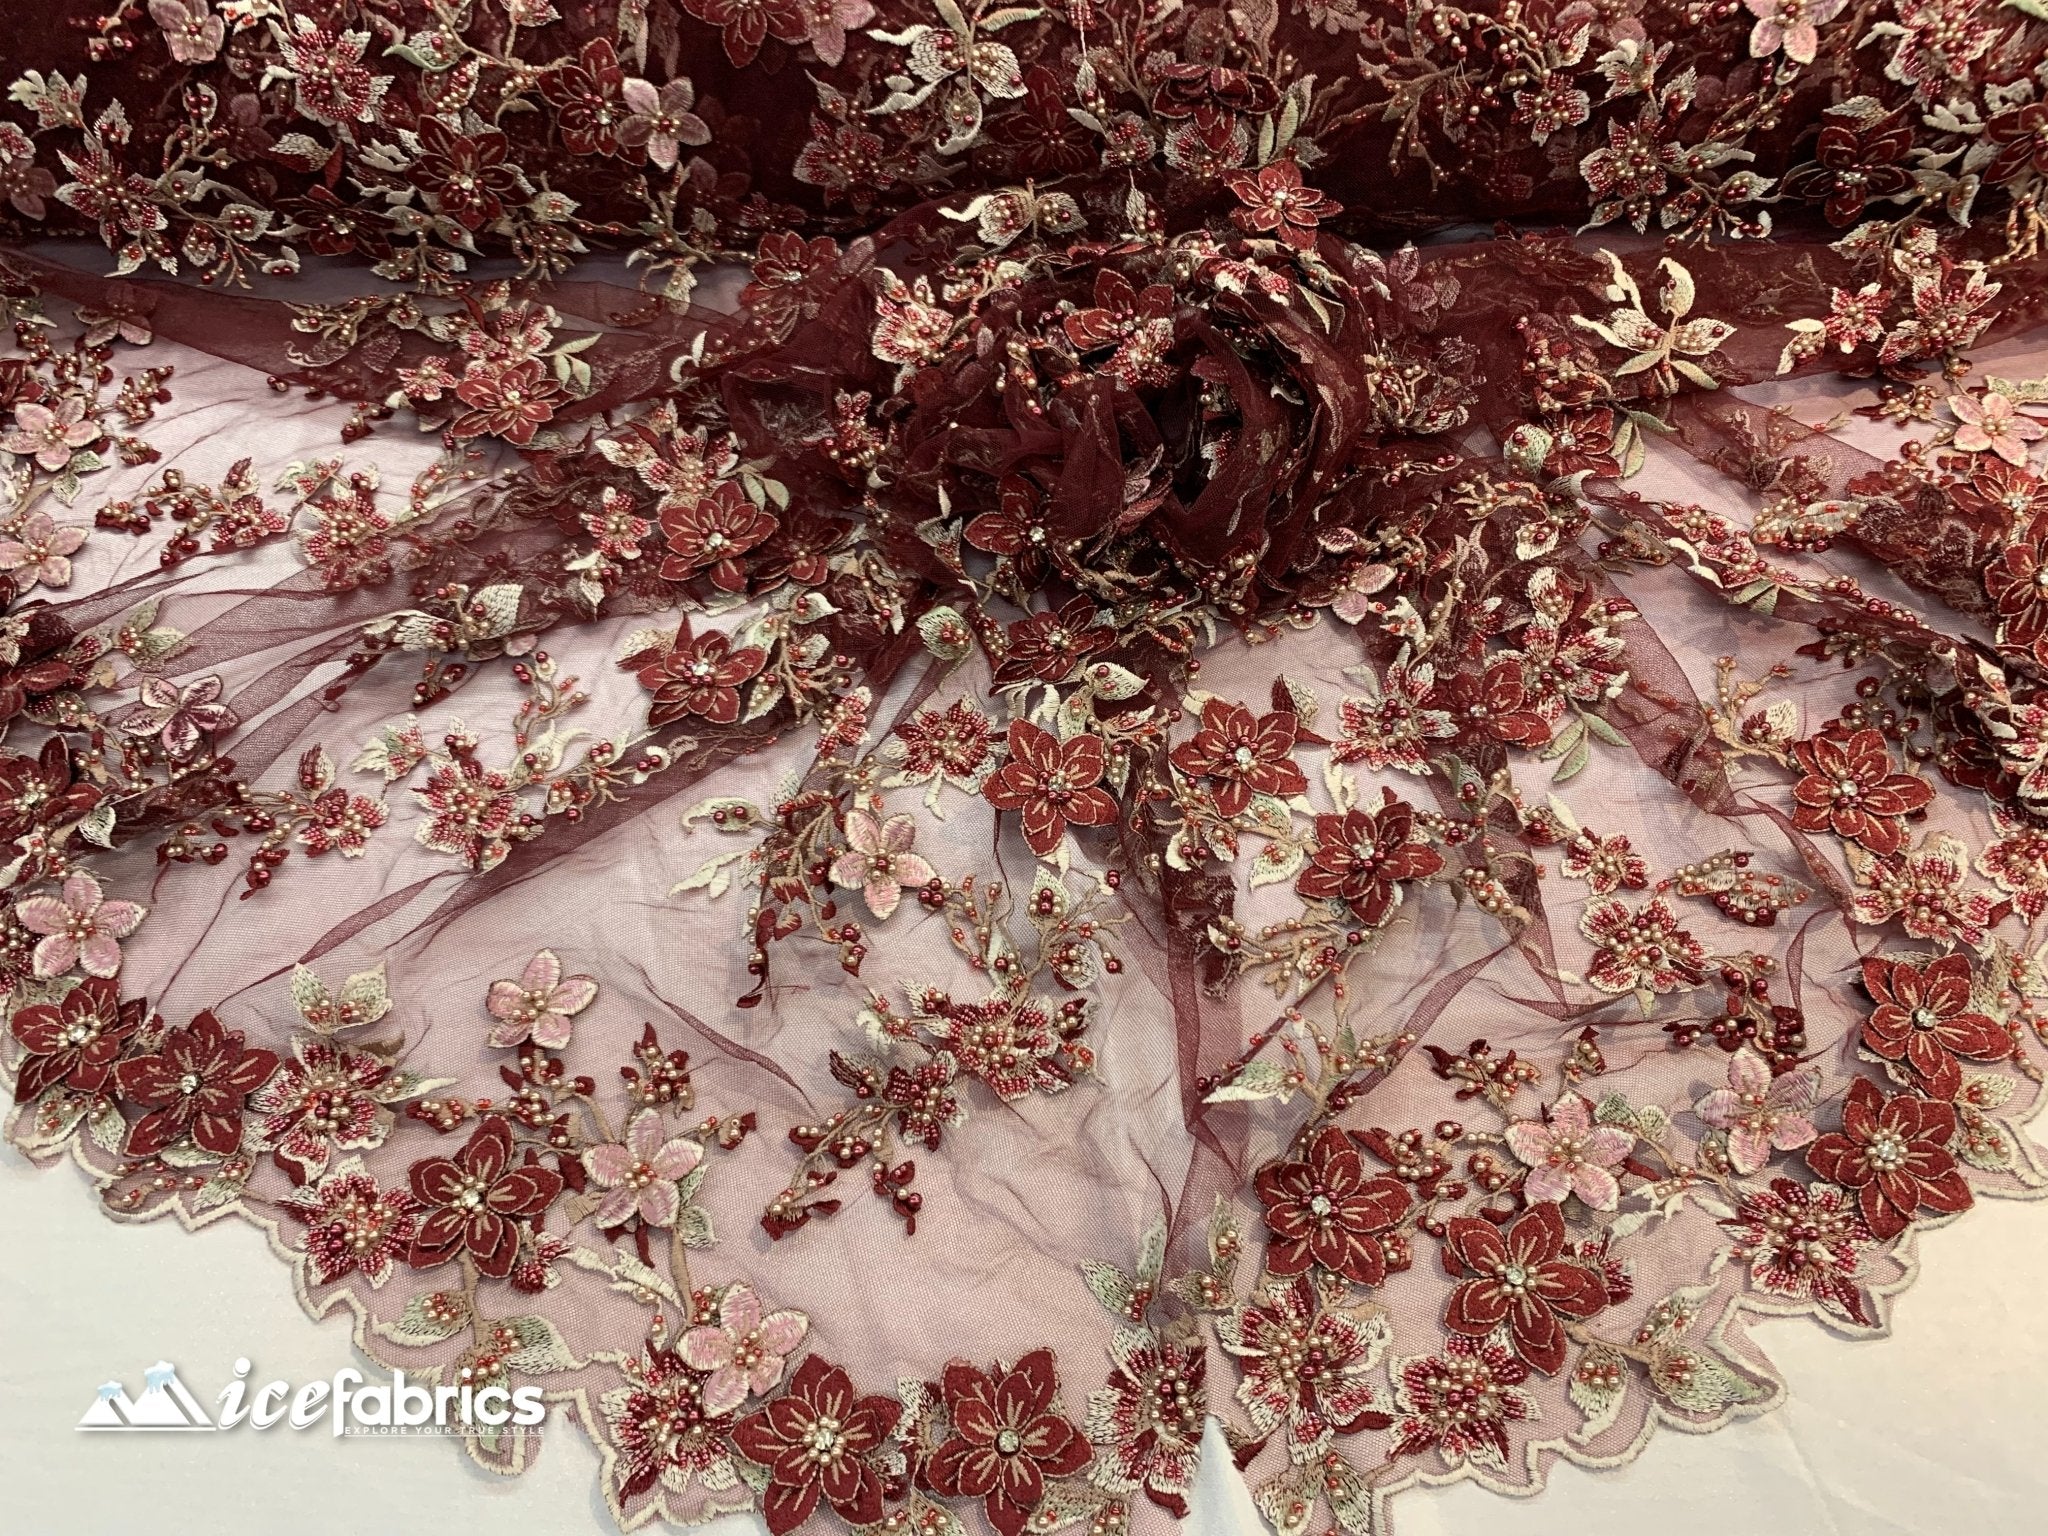 Embroidered Fabric/ 3D Flowers Beaded Fabric/ Lace Fabric/ BurgundyICE FABRICSICE FABRICSBurgundyEmbroidered Fabric/ 3D Flowers Beaded Fabric/ Lace Fabric/ Burgundy ICE FABRICS